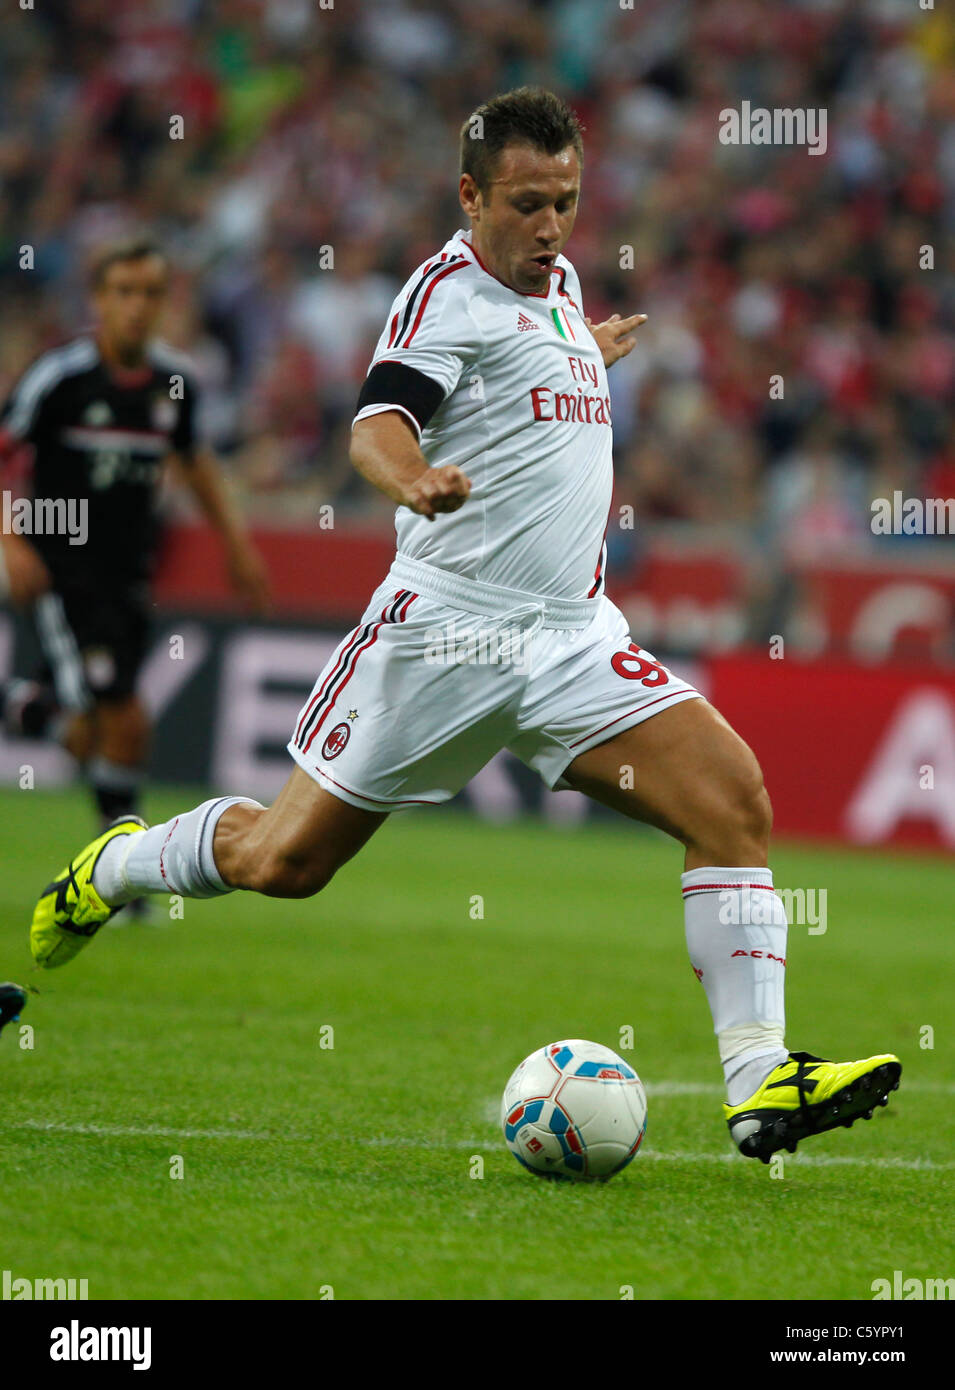 AC Milan player Antonio Cassano in action Stock Photo